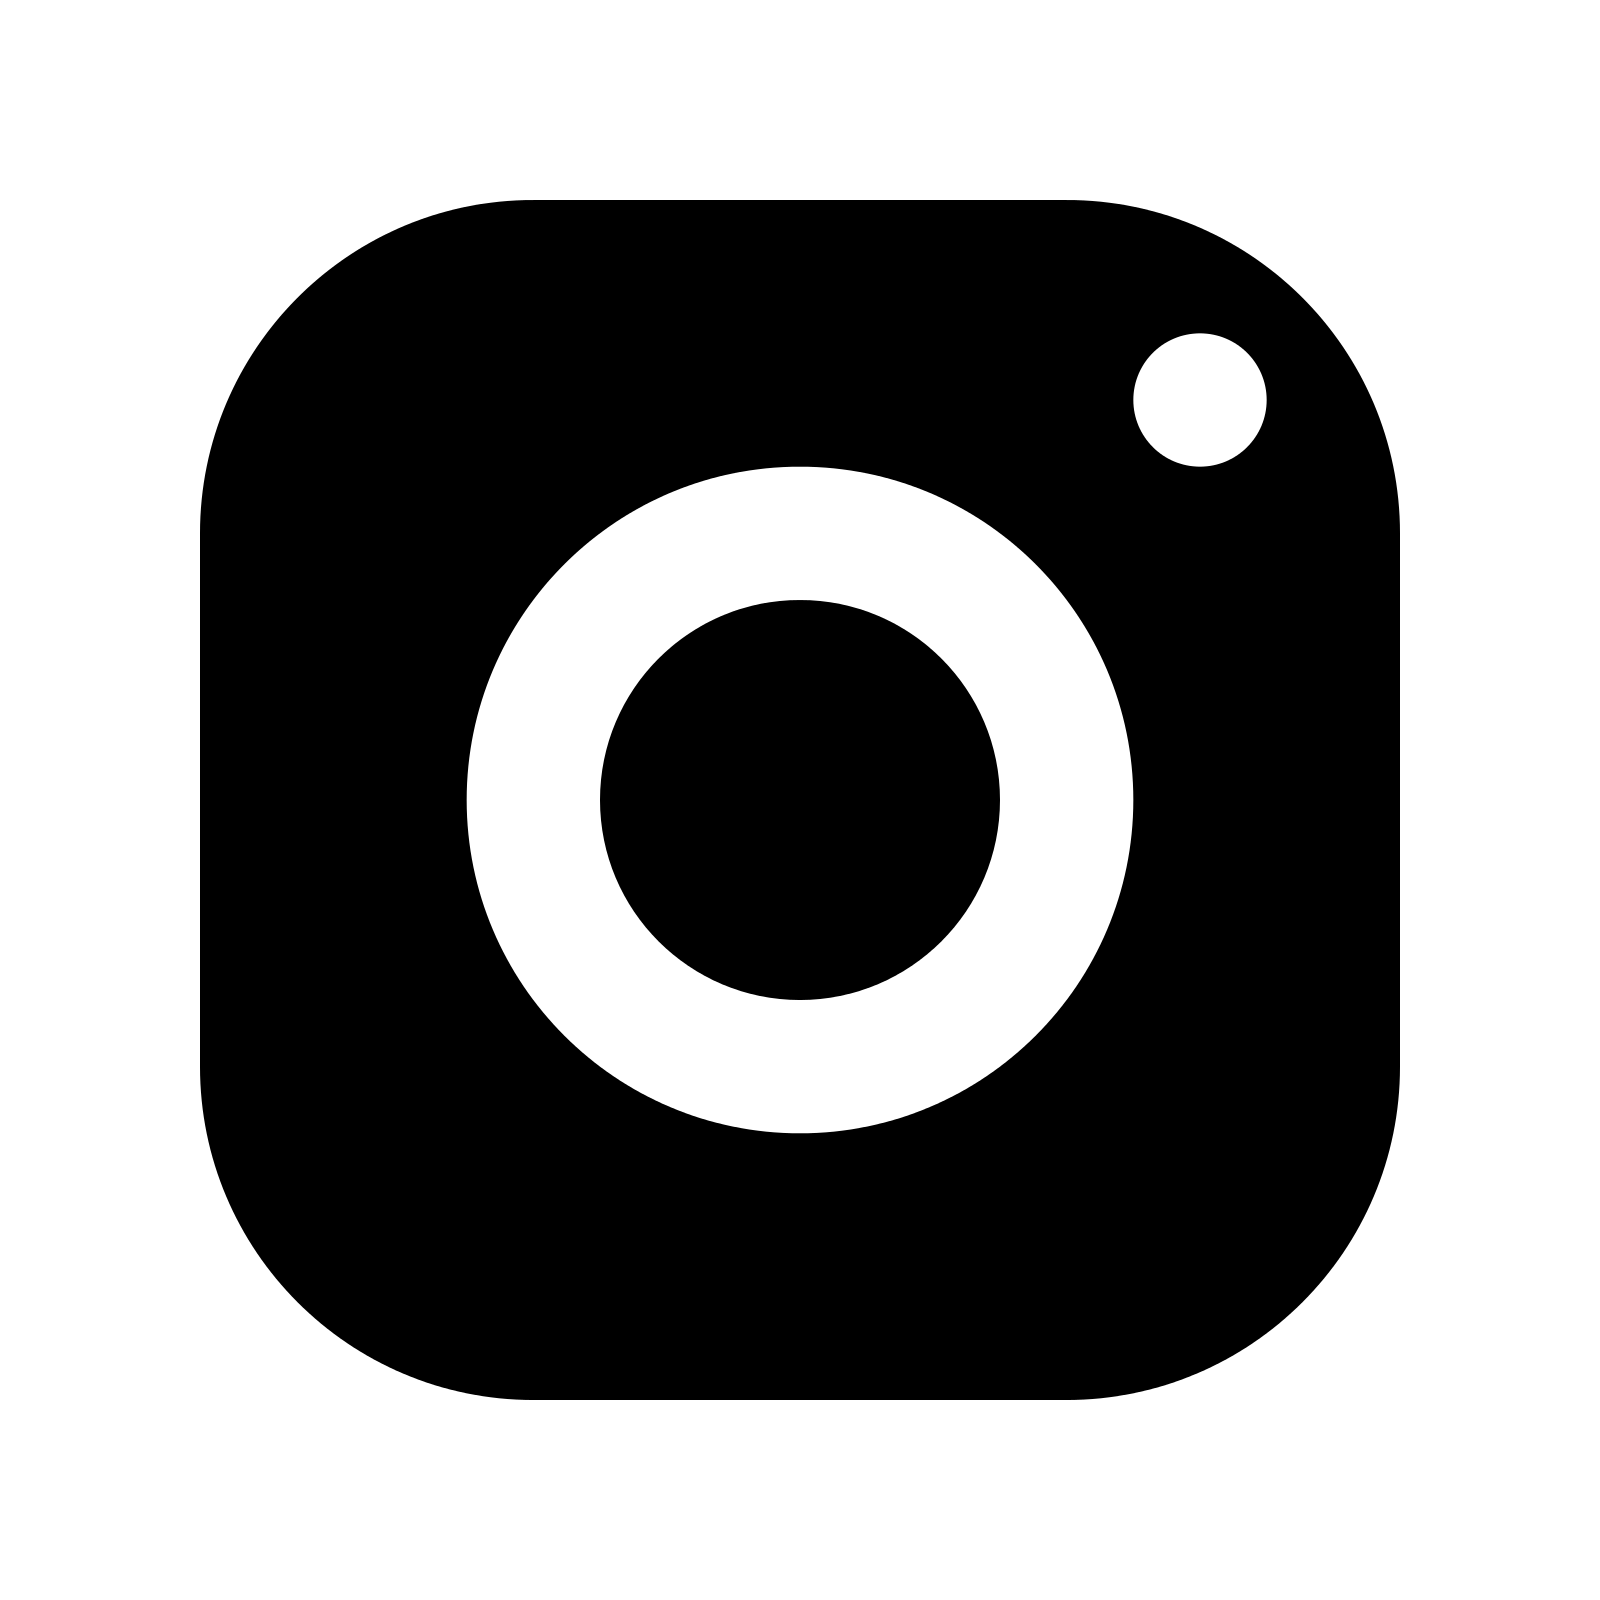 New Instagram Logo - Free New Instagram Icon 365273 | Download New Instagram Icon - 365273